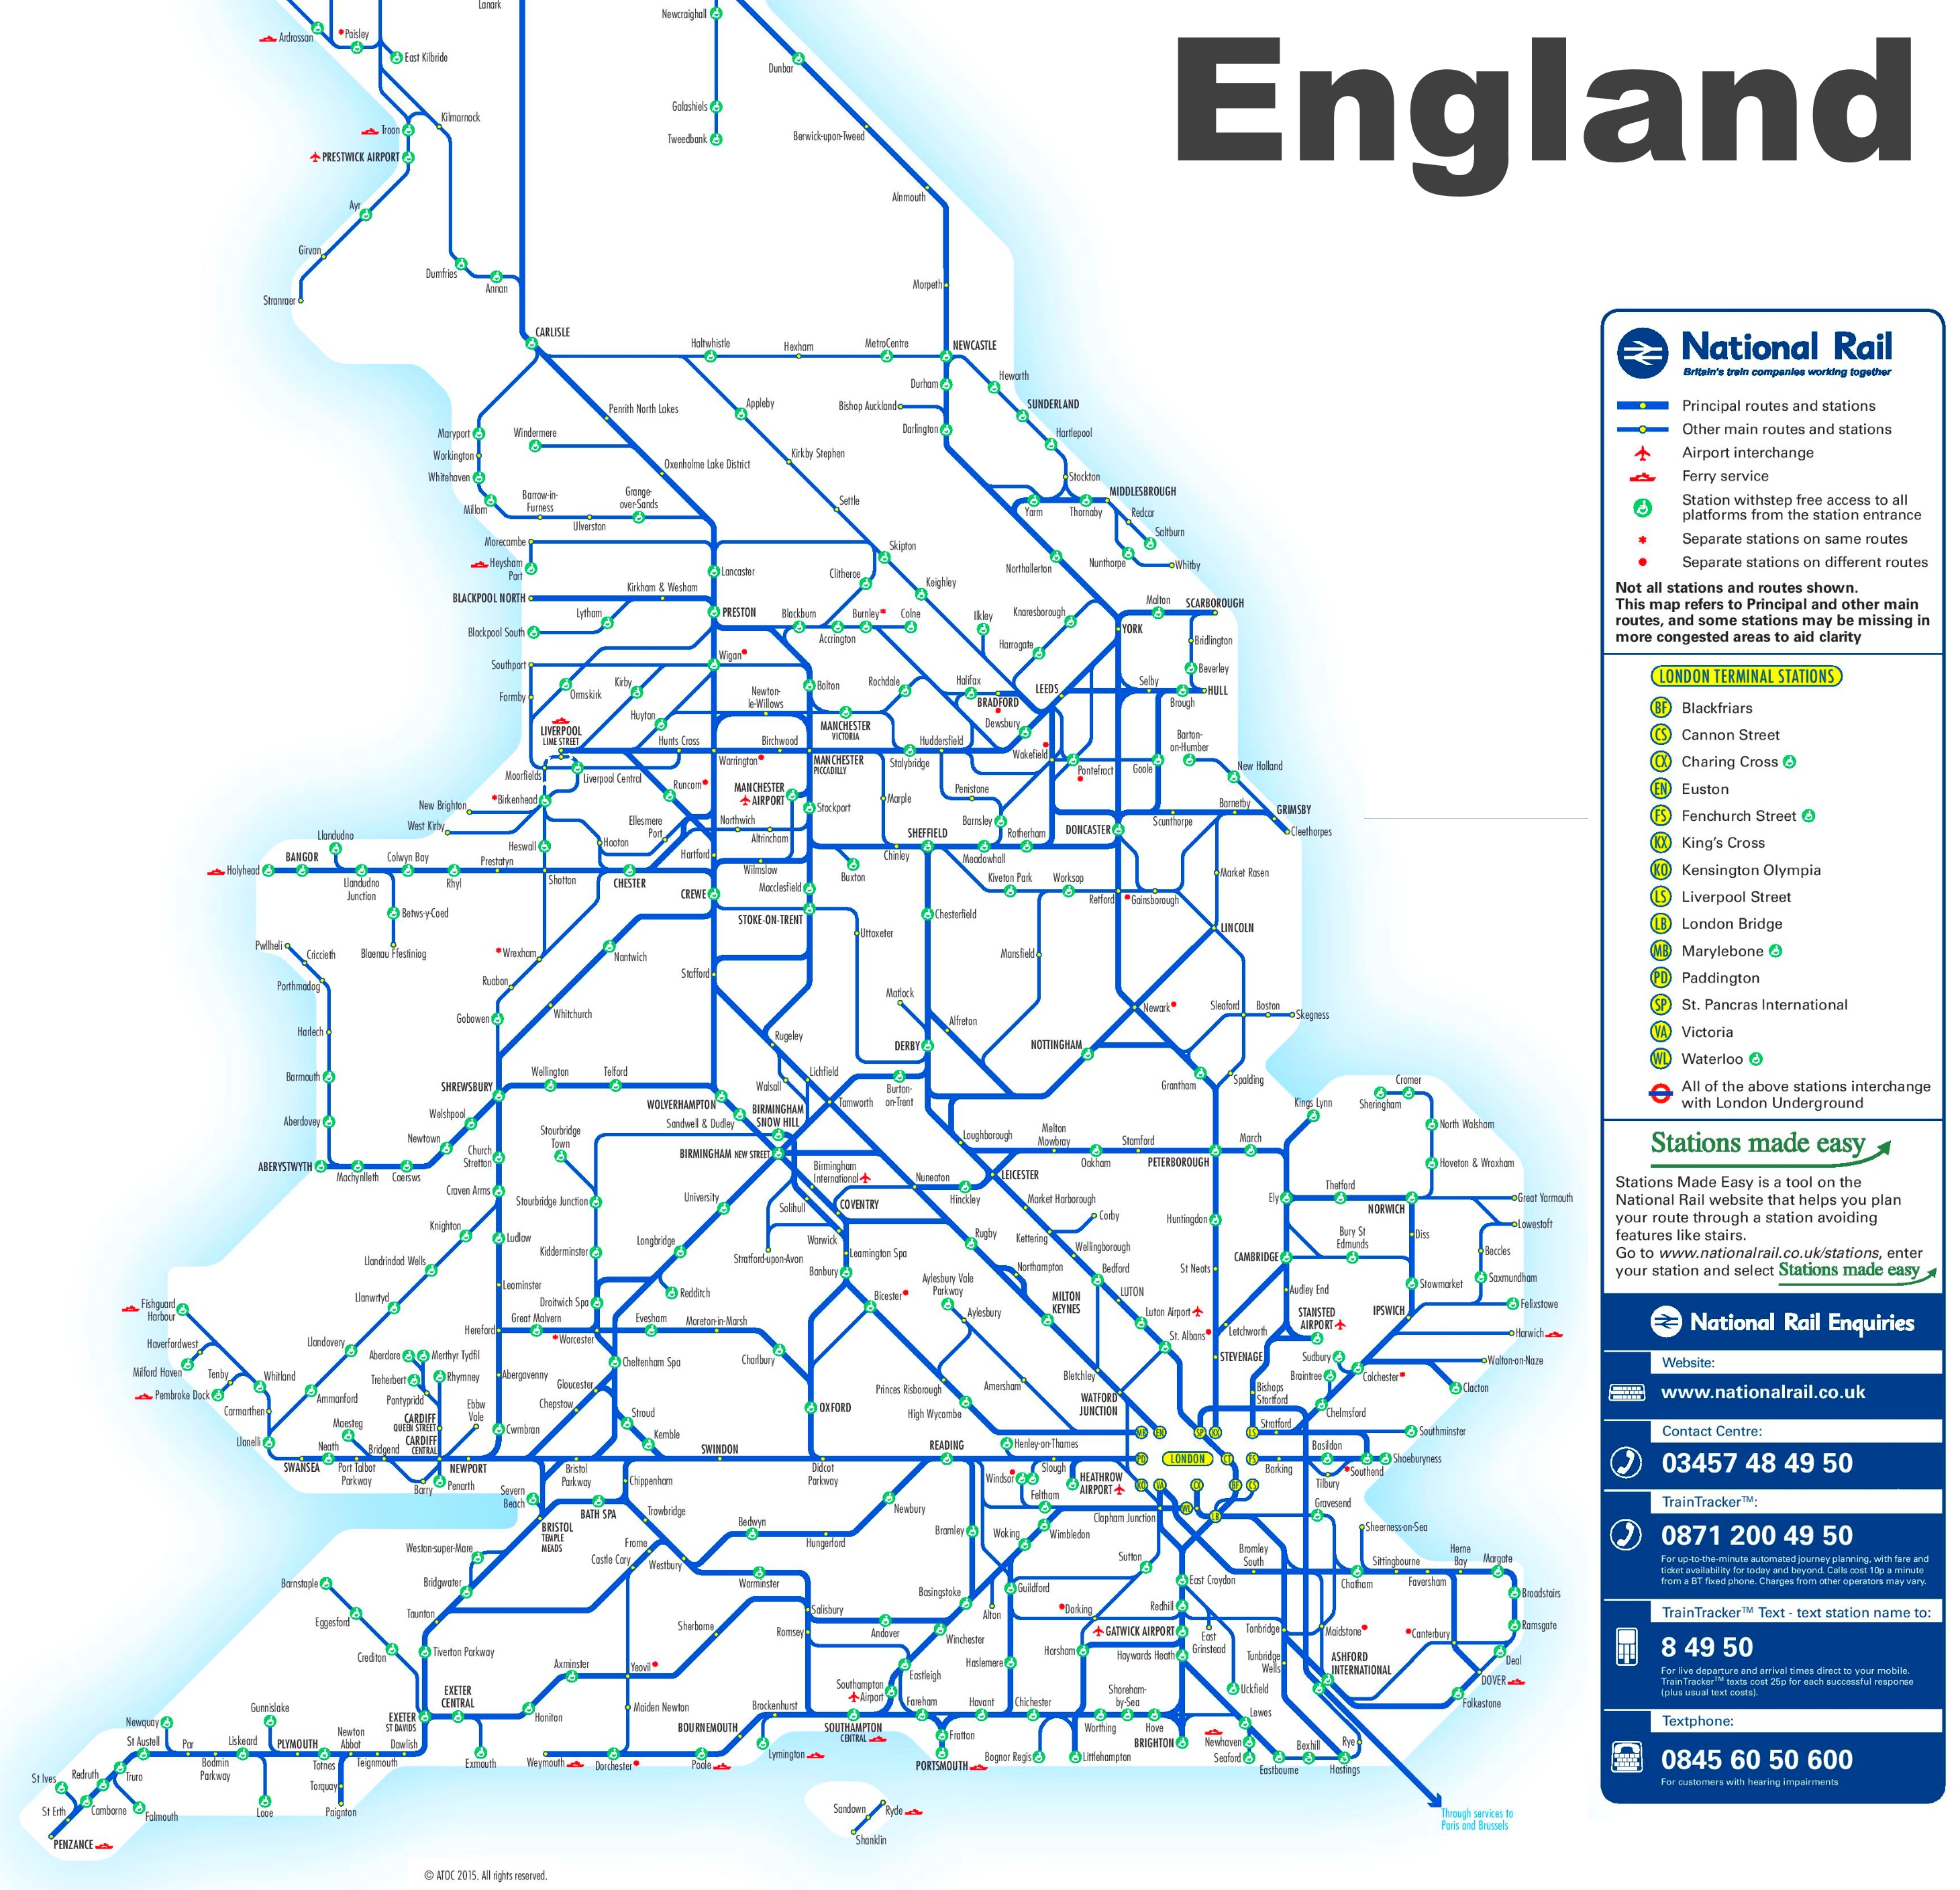 England Rail Map England National Rail Route Map - Photos